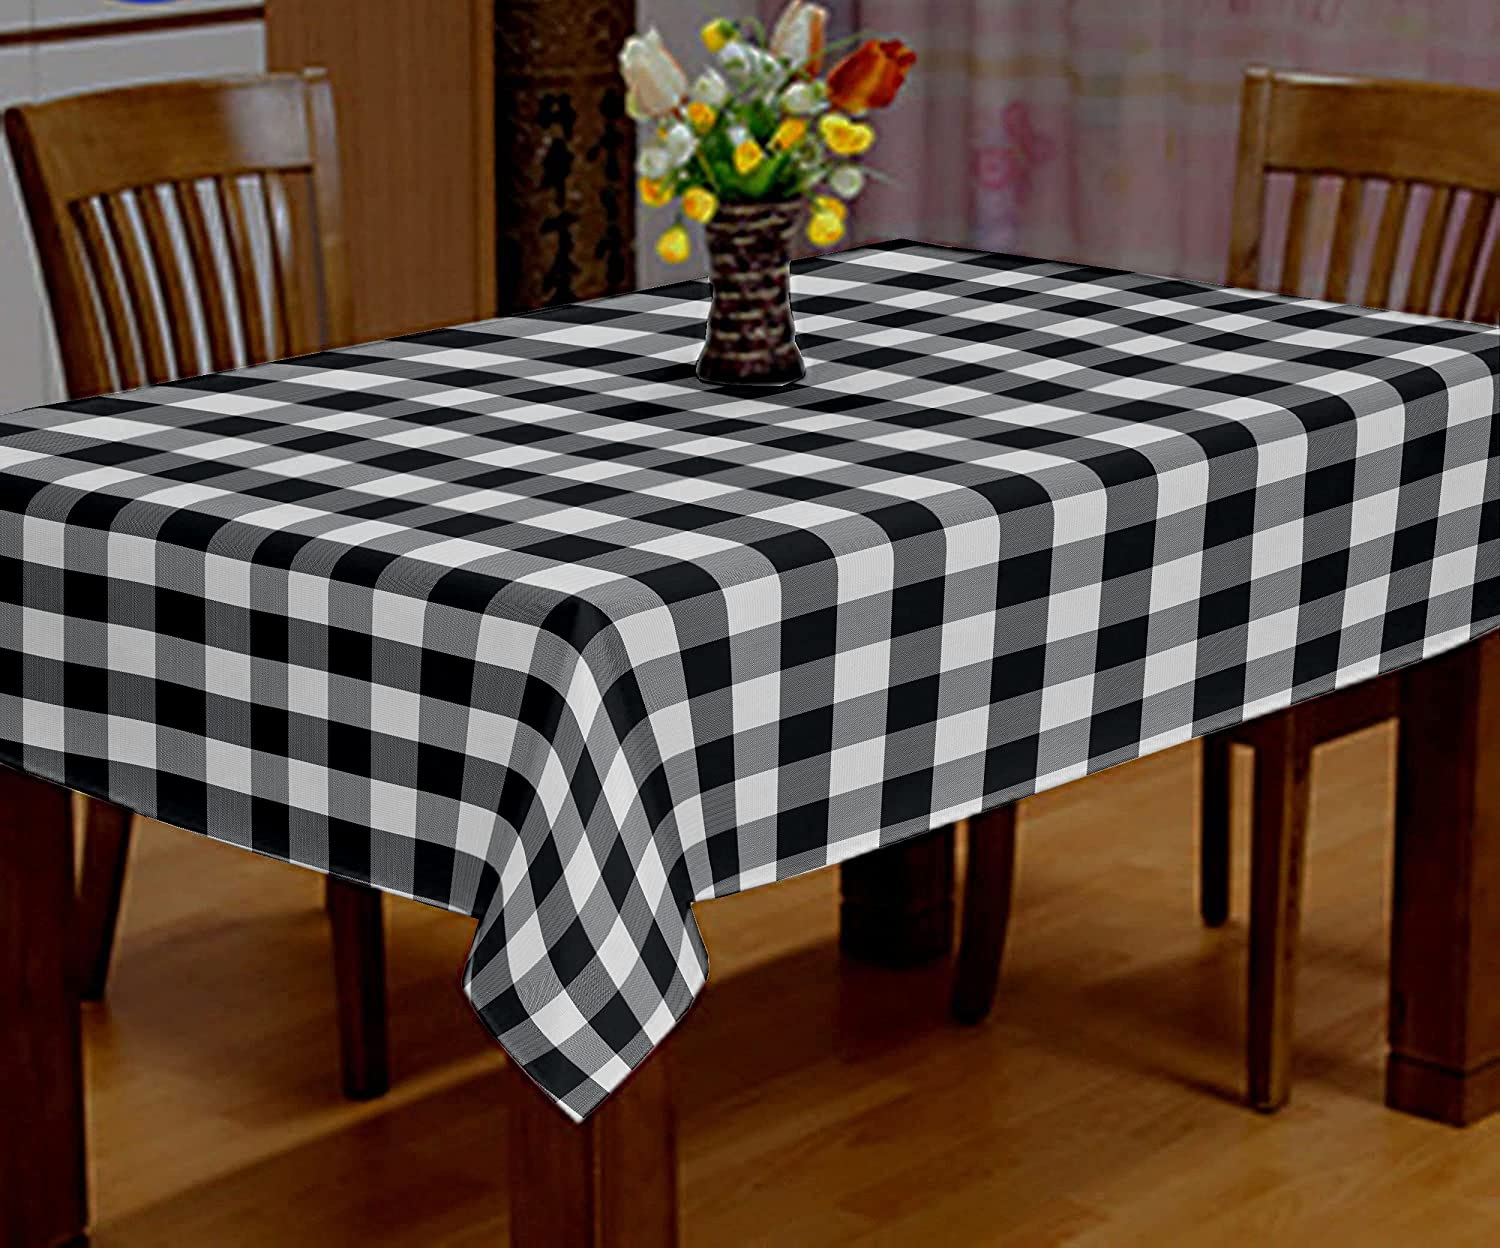 Lushomes Buffalo Checks Black Plaid Square Dining Table Cover Cloth (Size 60 x 60”, 4 Seater Square Table Cloth)